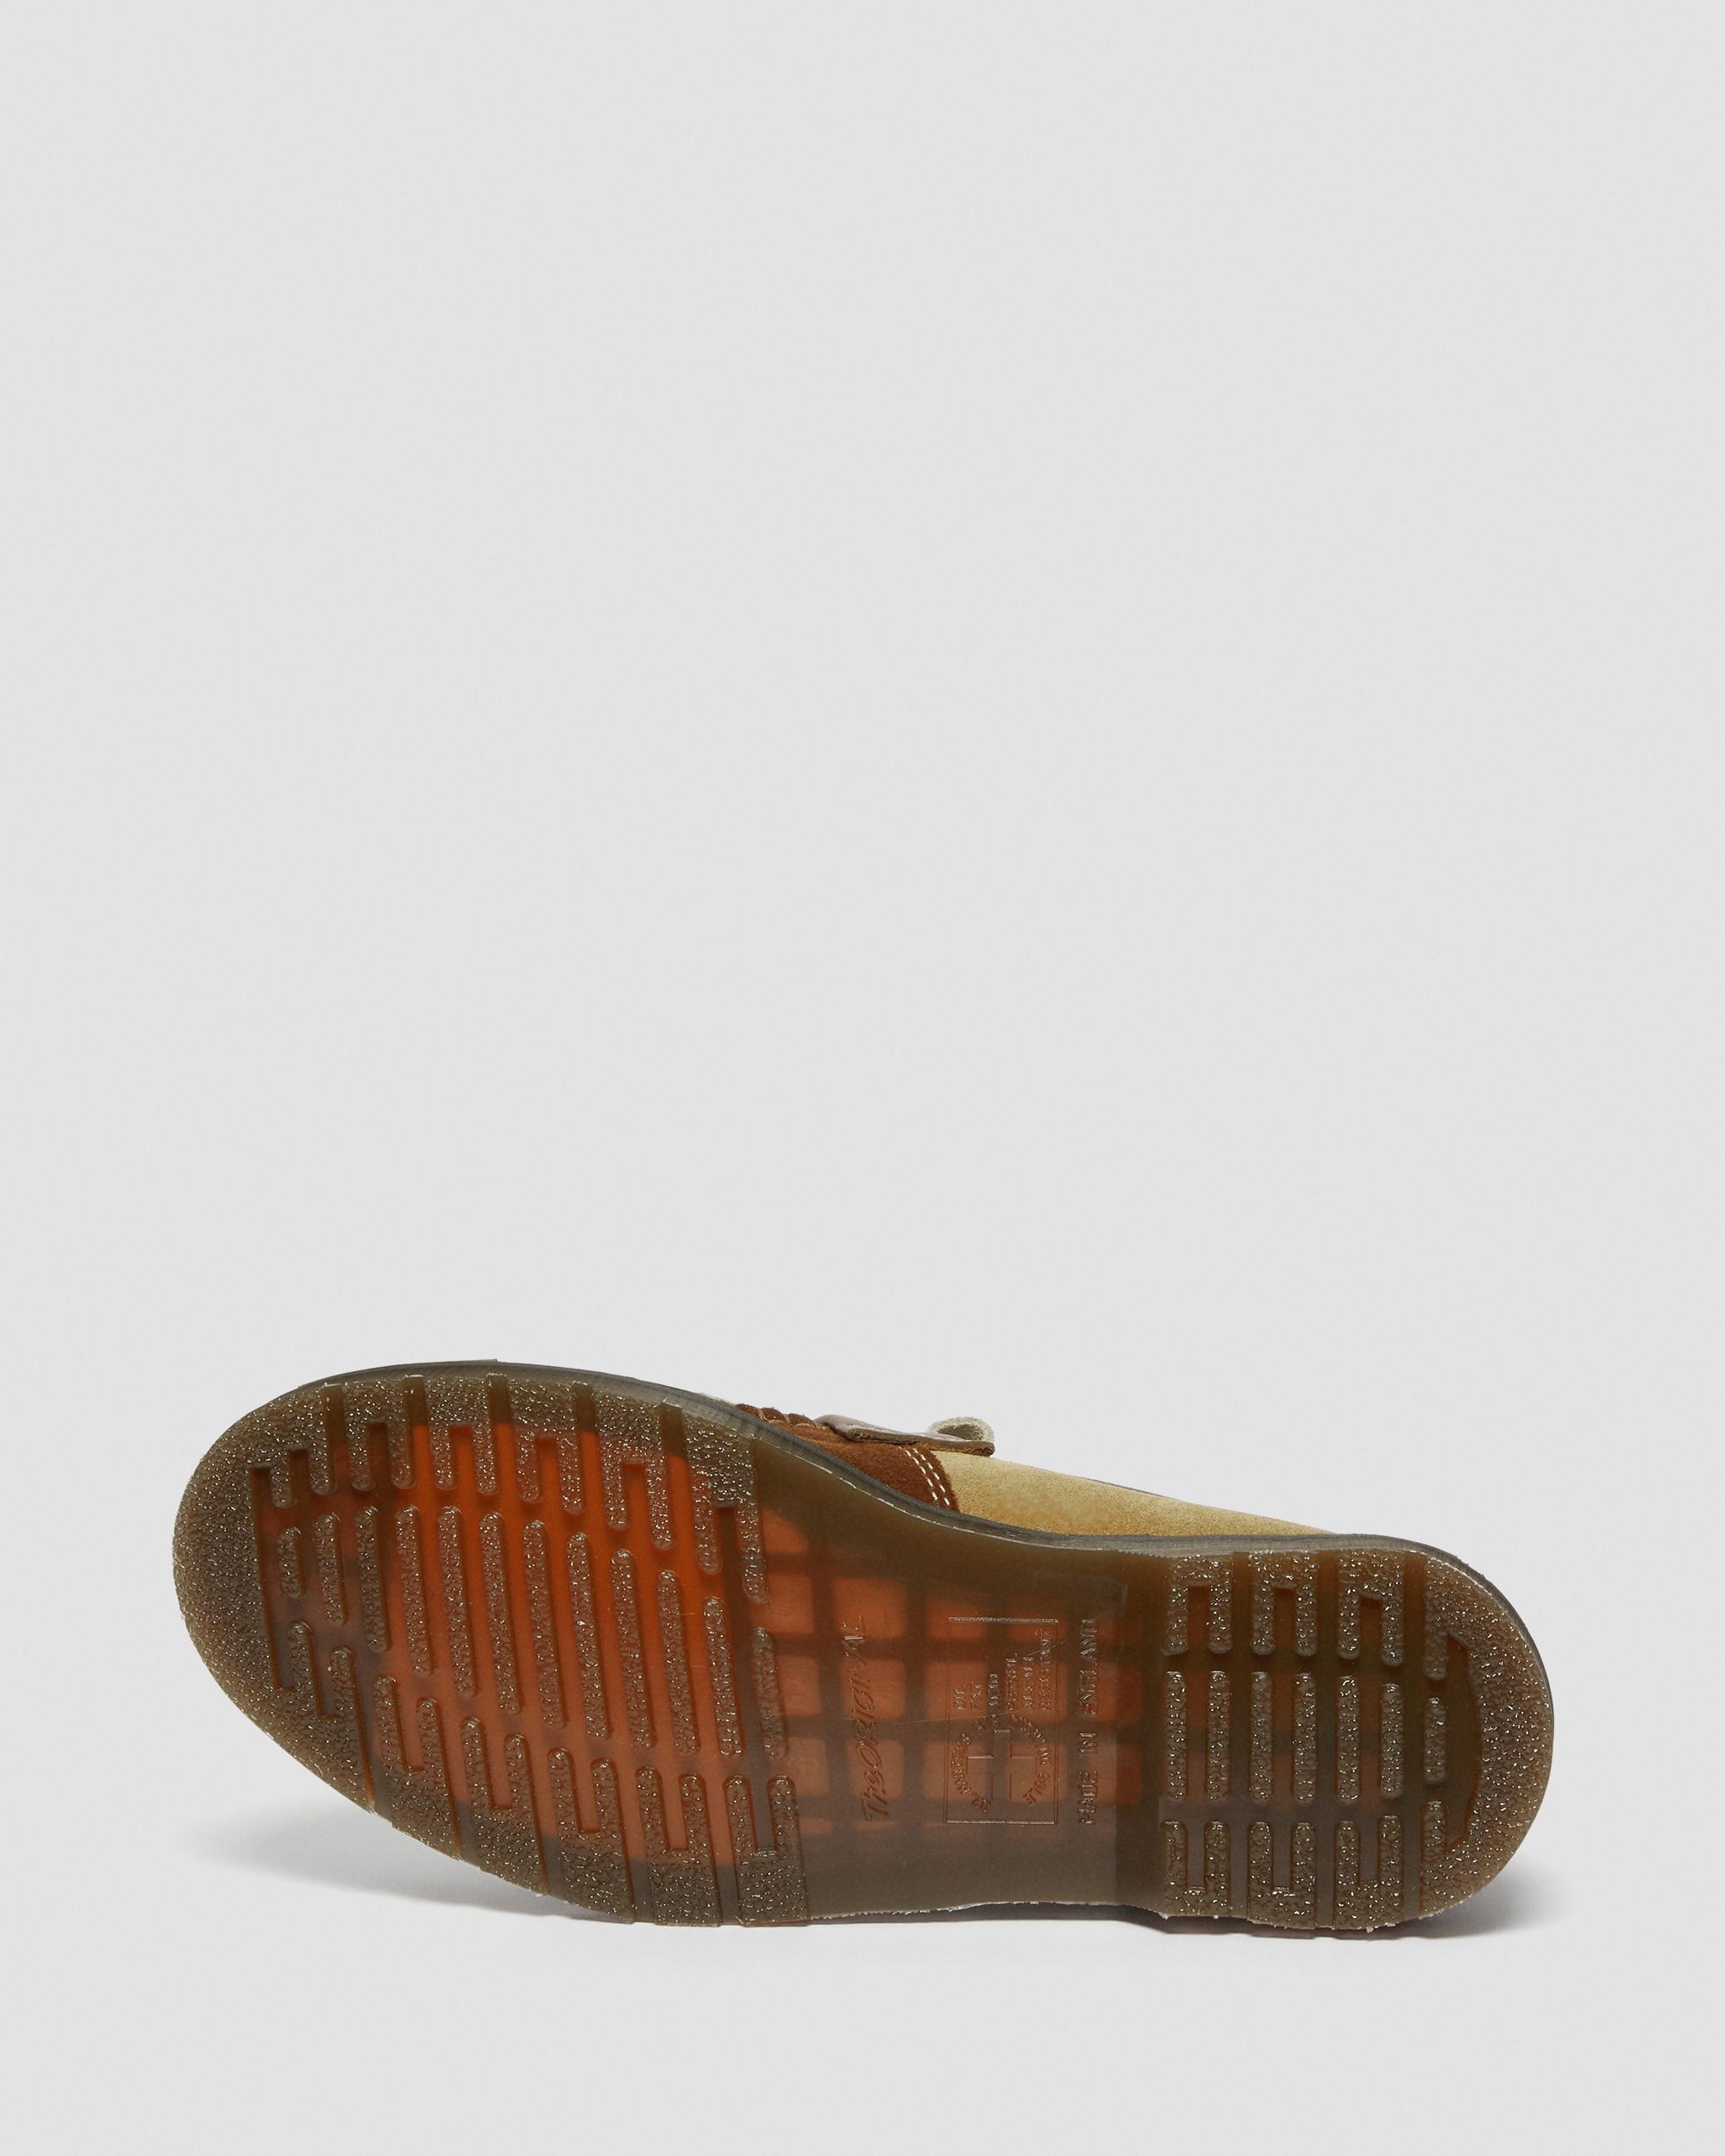 Adrian Made in England Suede Tassle Loafers in Dark Tan